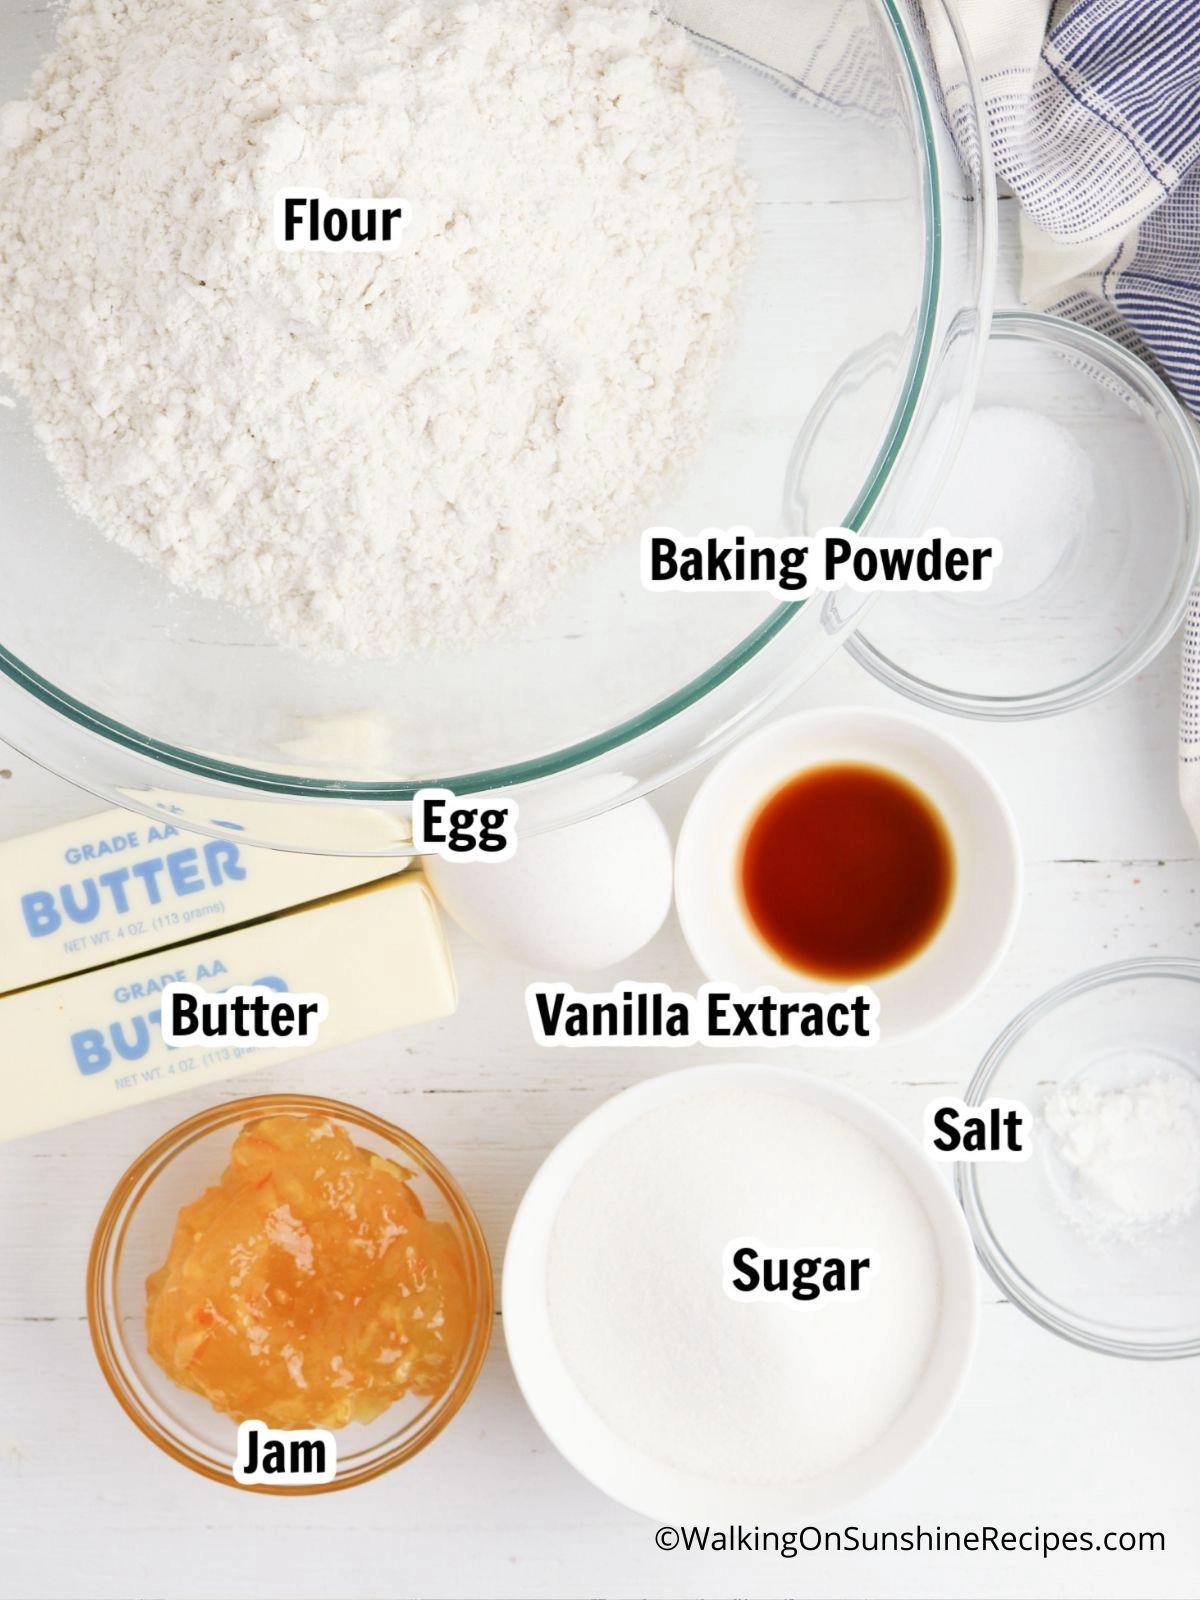 Ingredients for thumbprint cookies.